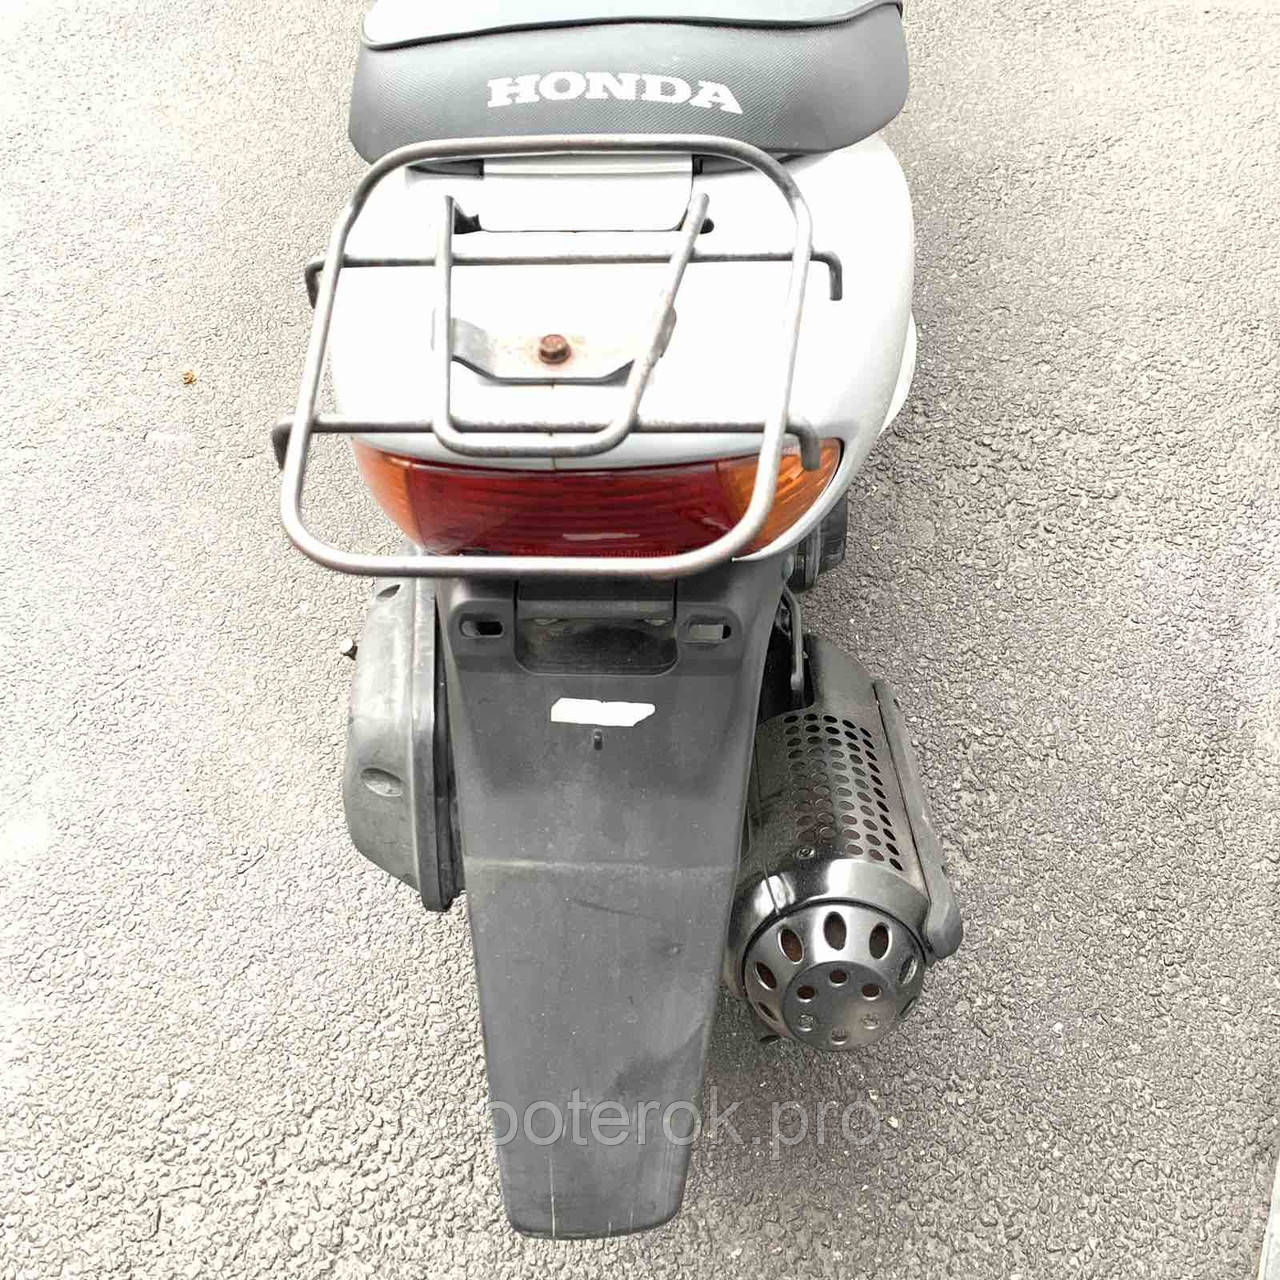 Skuter Honda Dio Af34 B U V Kategorii Motocikly Motorollery Skutery Mopedy Na Bigl Ua